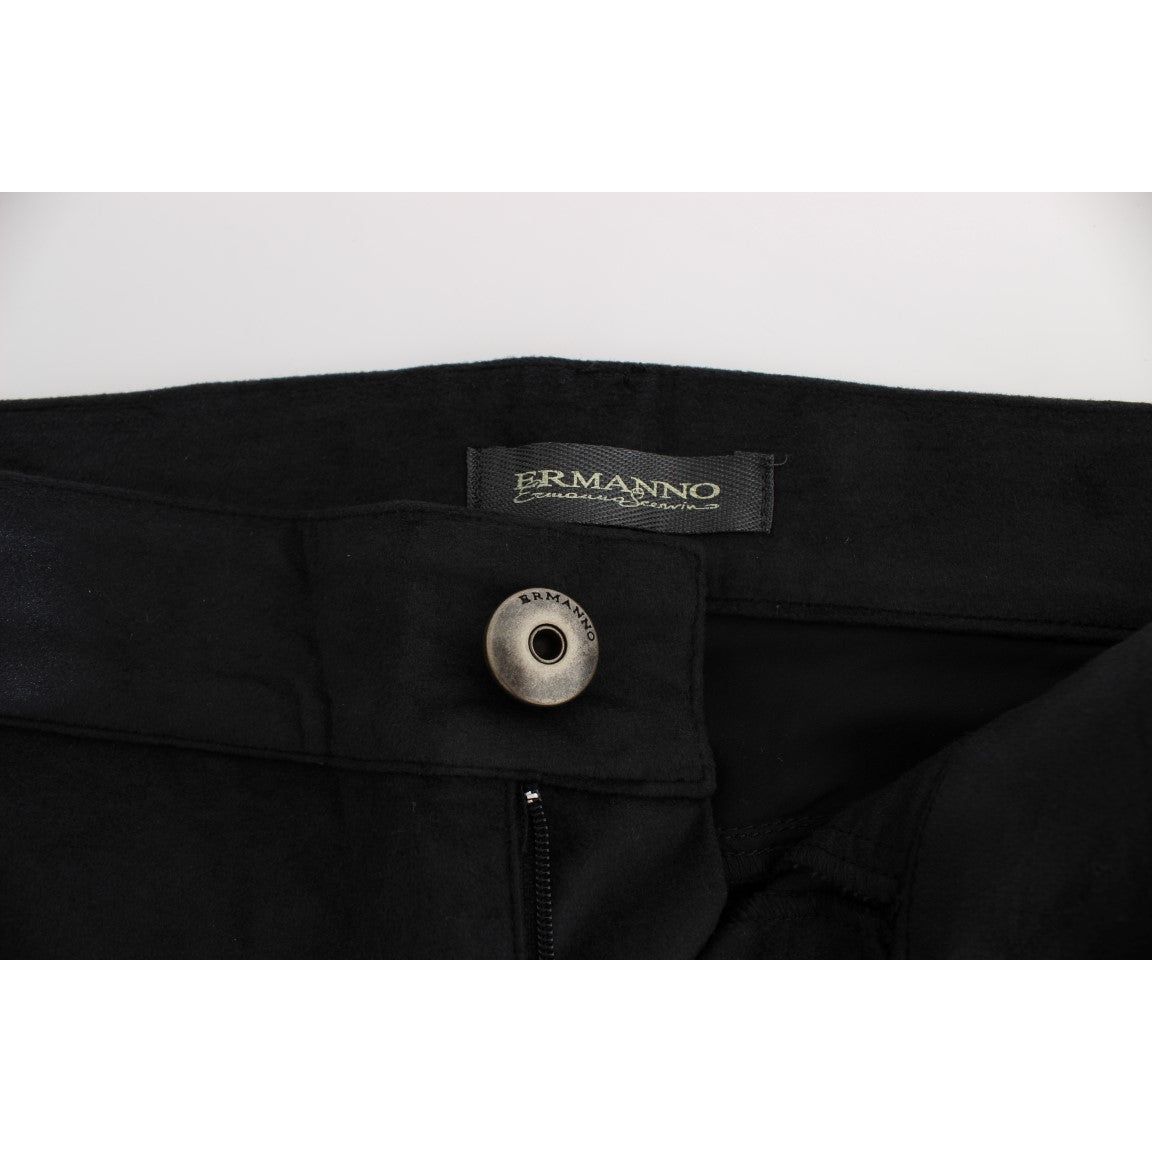 Ermanno ScervinoChic Black Regular Fit TrousersMcRichard Designer Brands£199.00